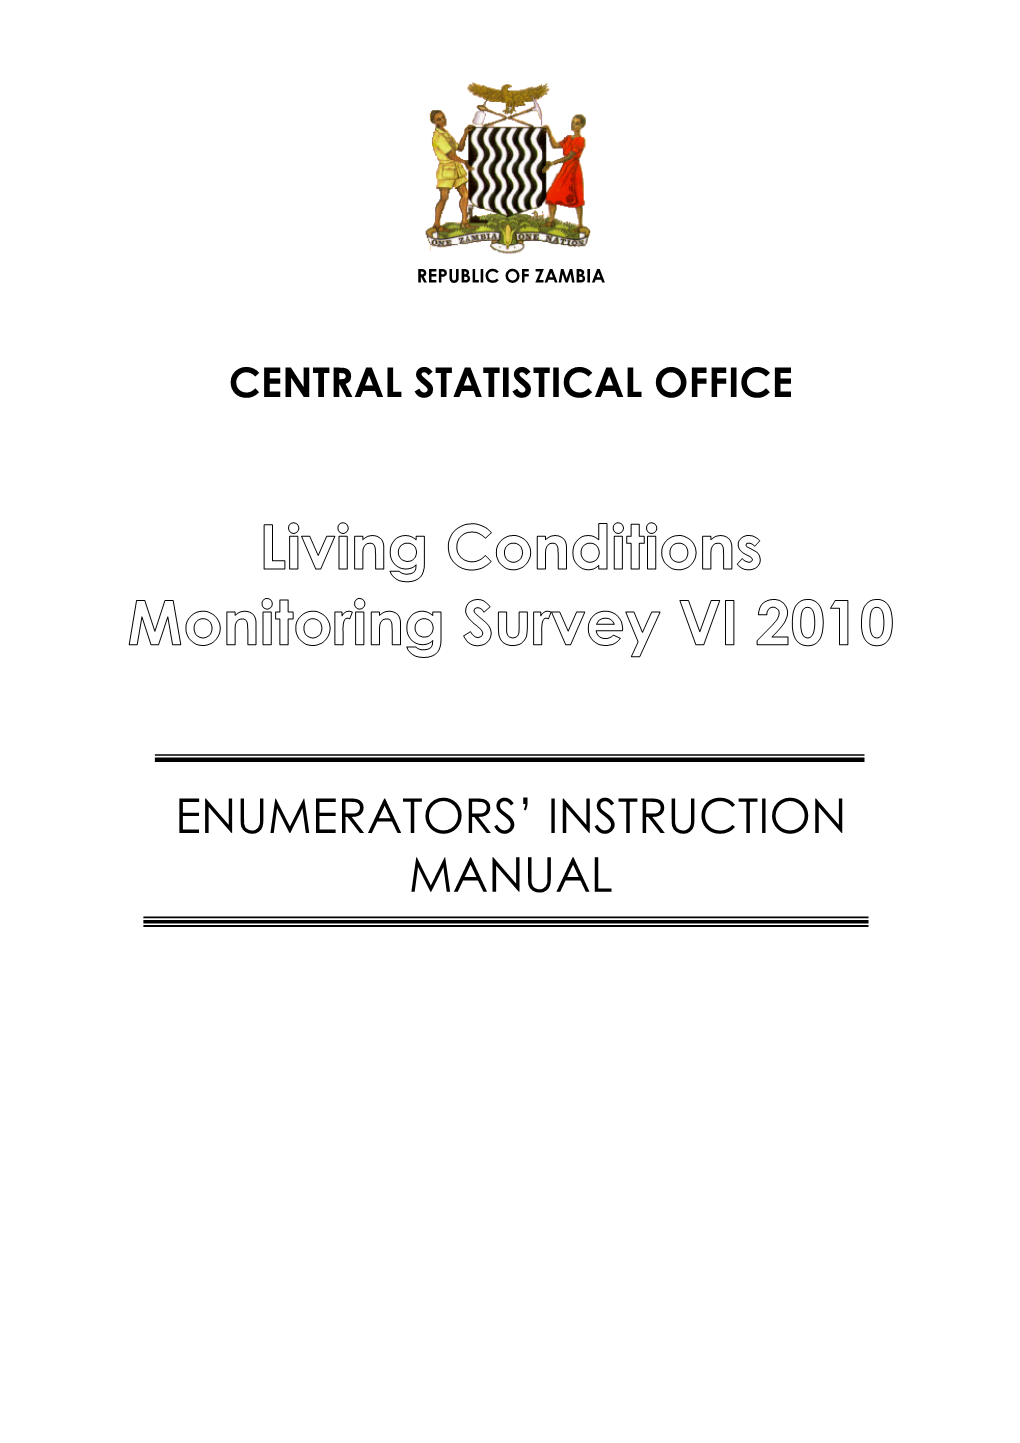 Enumerators' Instruction Manual